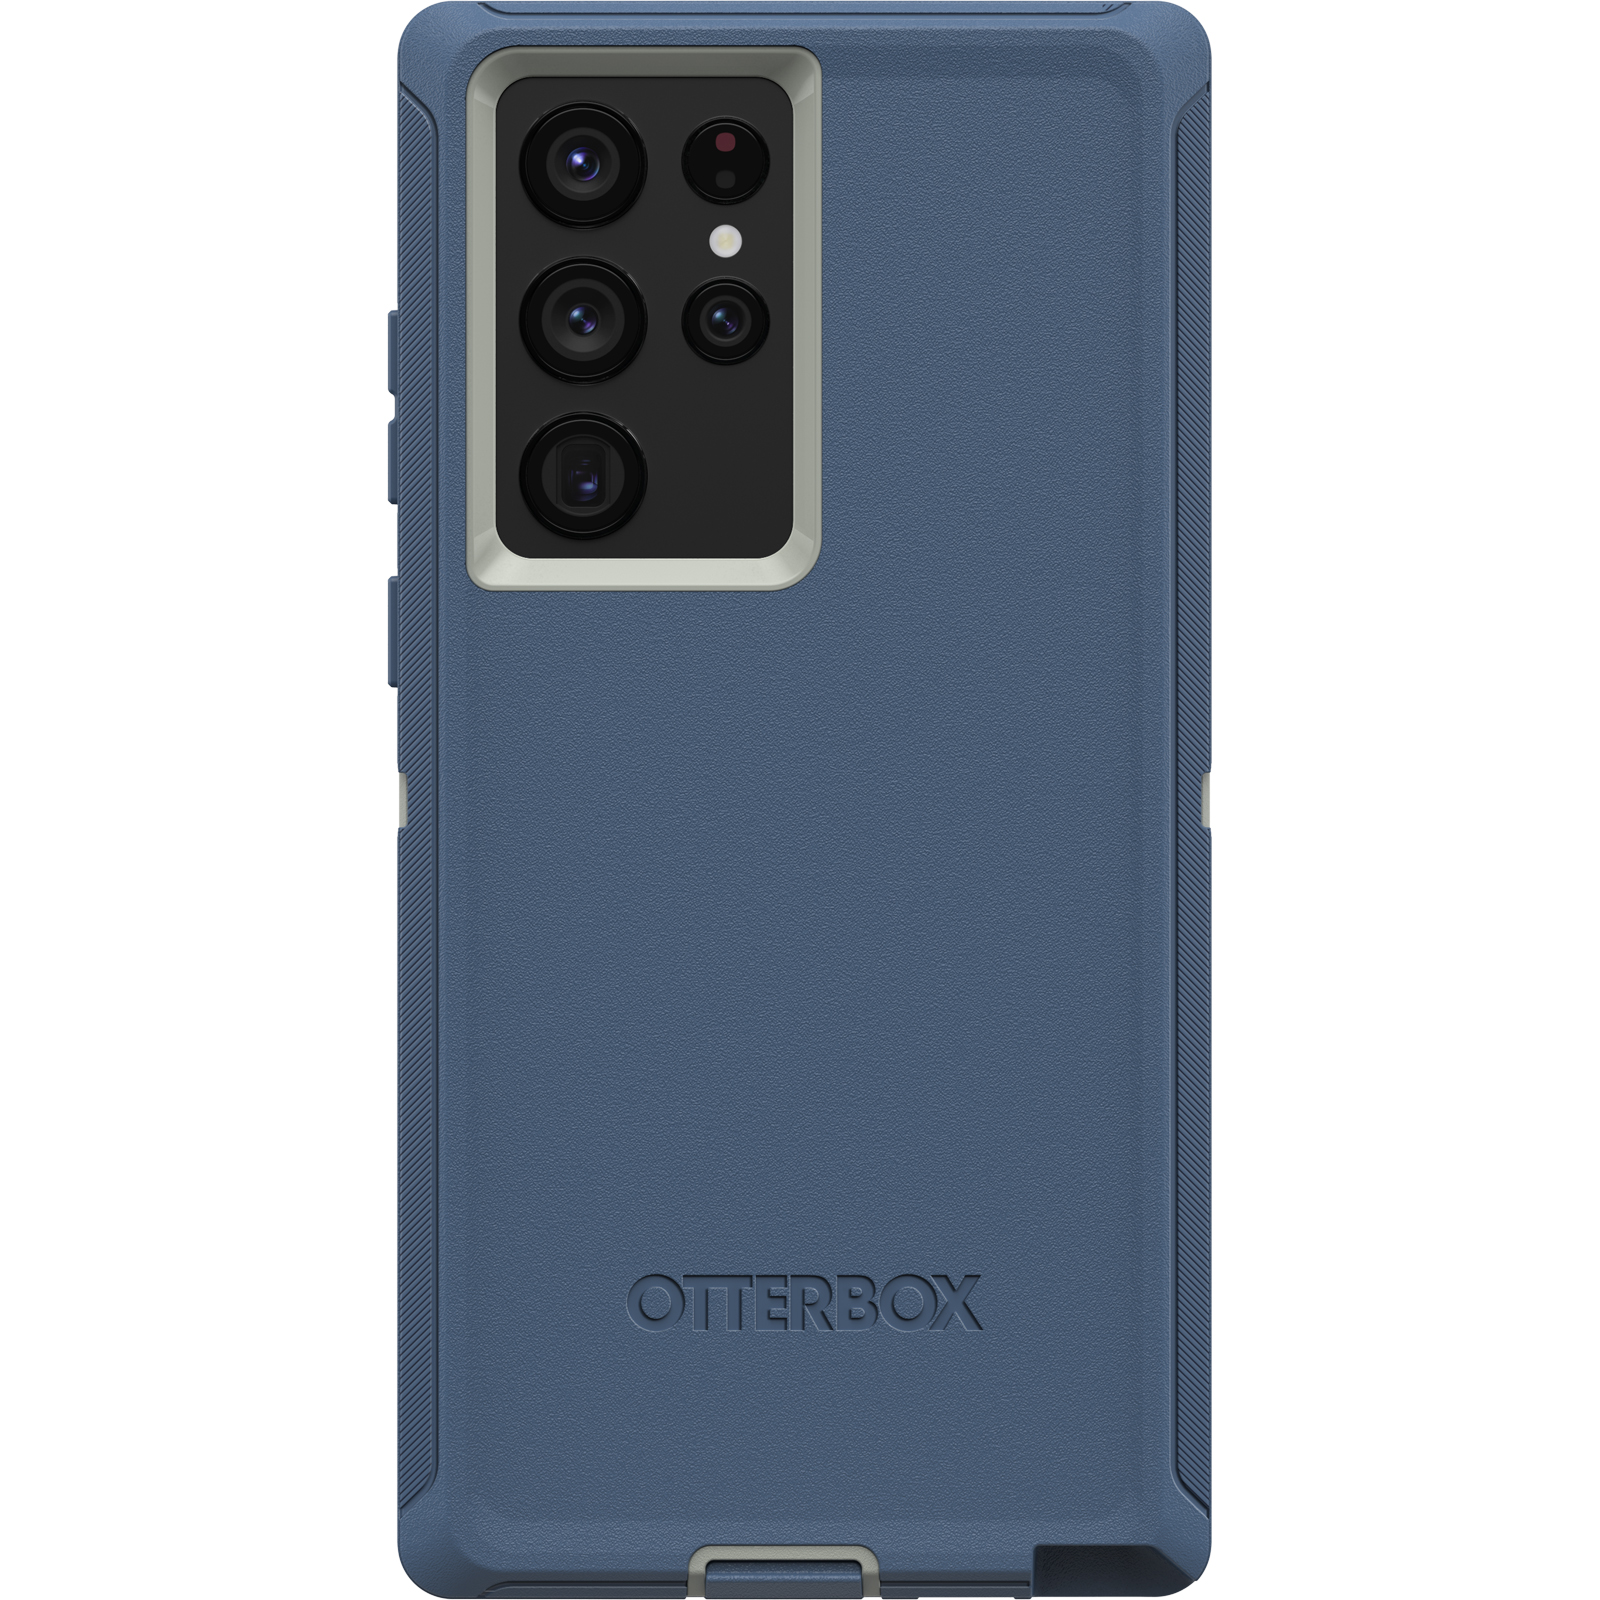 OtterBox pour Samsung Galaxy S22 Ultra coque antichoc robuste Premium Série Defender Noir 